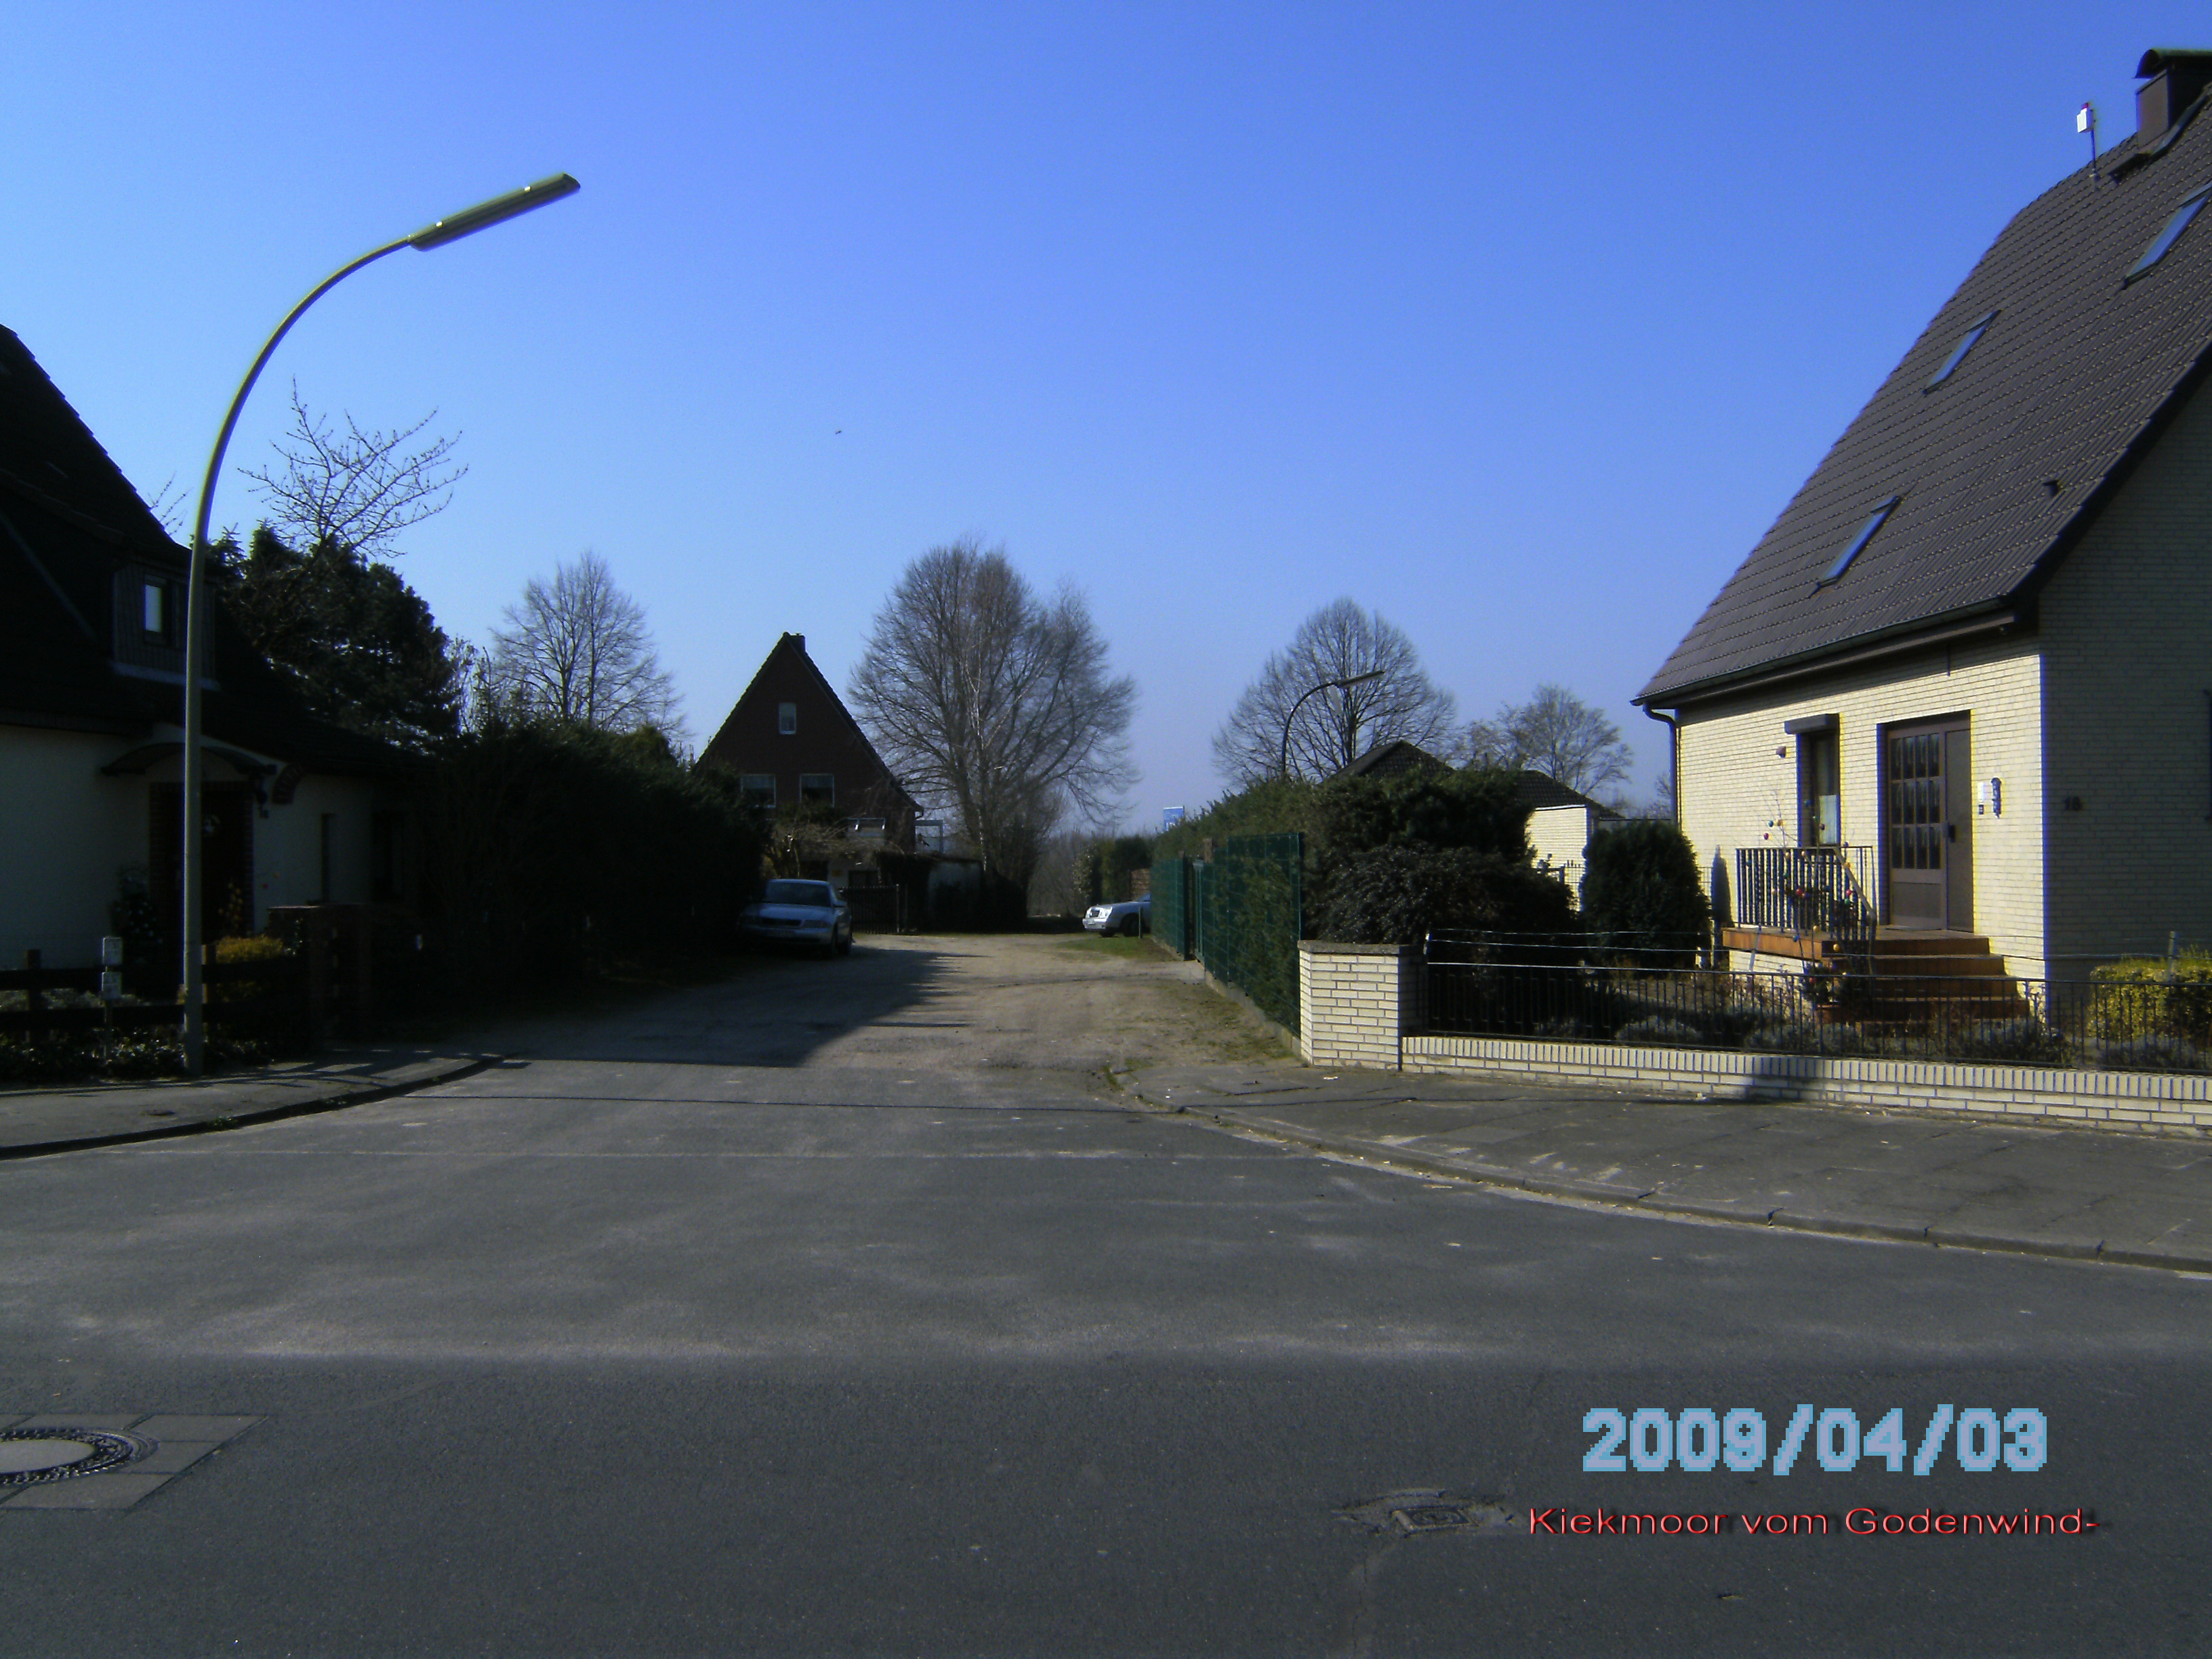 Kiekmoor vom Godenwind-2009-04-03 10-27-13_0138